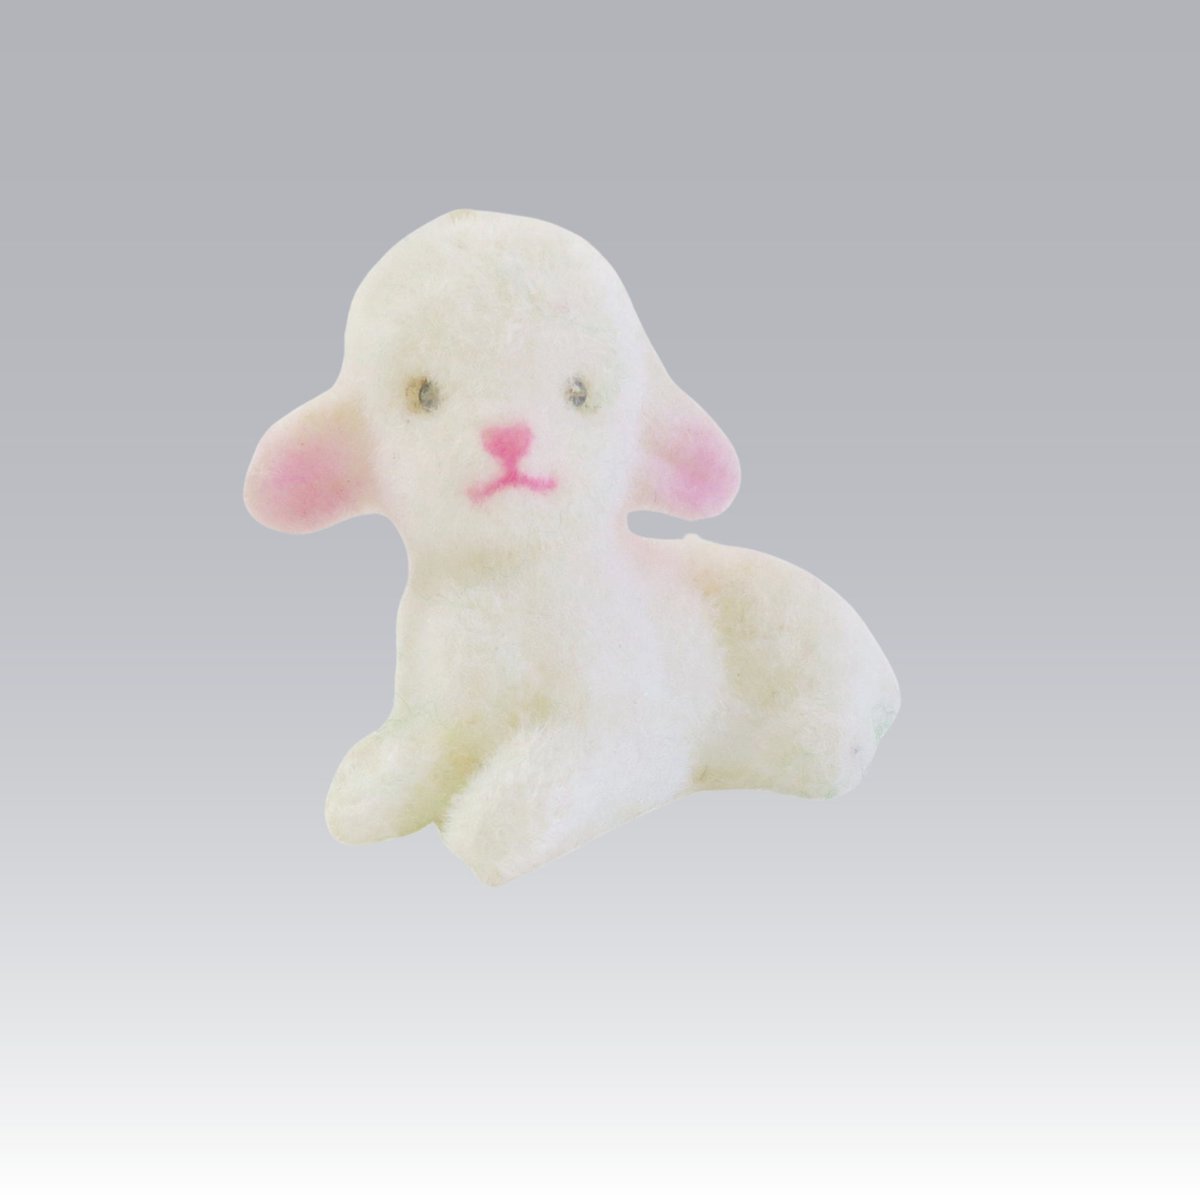 Mid-Century Flocked Lamb or Sheep • Spring Decor • Tiered Tray Figure tuppu.net/5a852650 #VintageFun #SwirlingOrange11 #Etsyteamunity #SMILEtt23